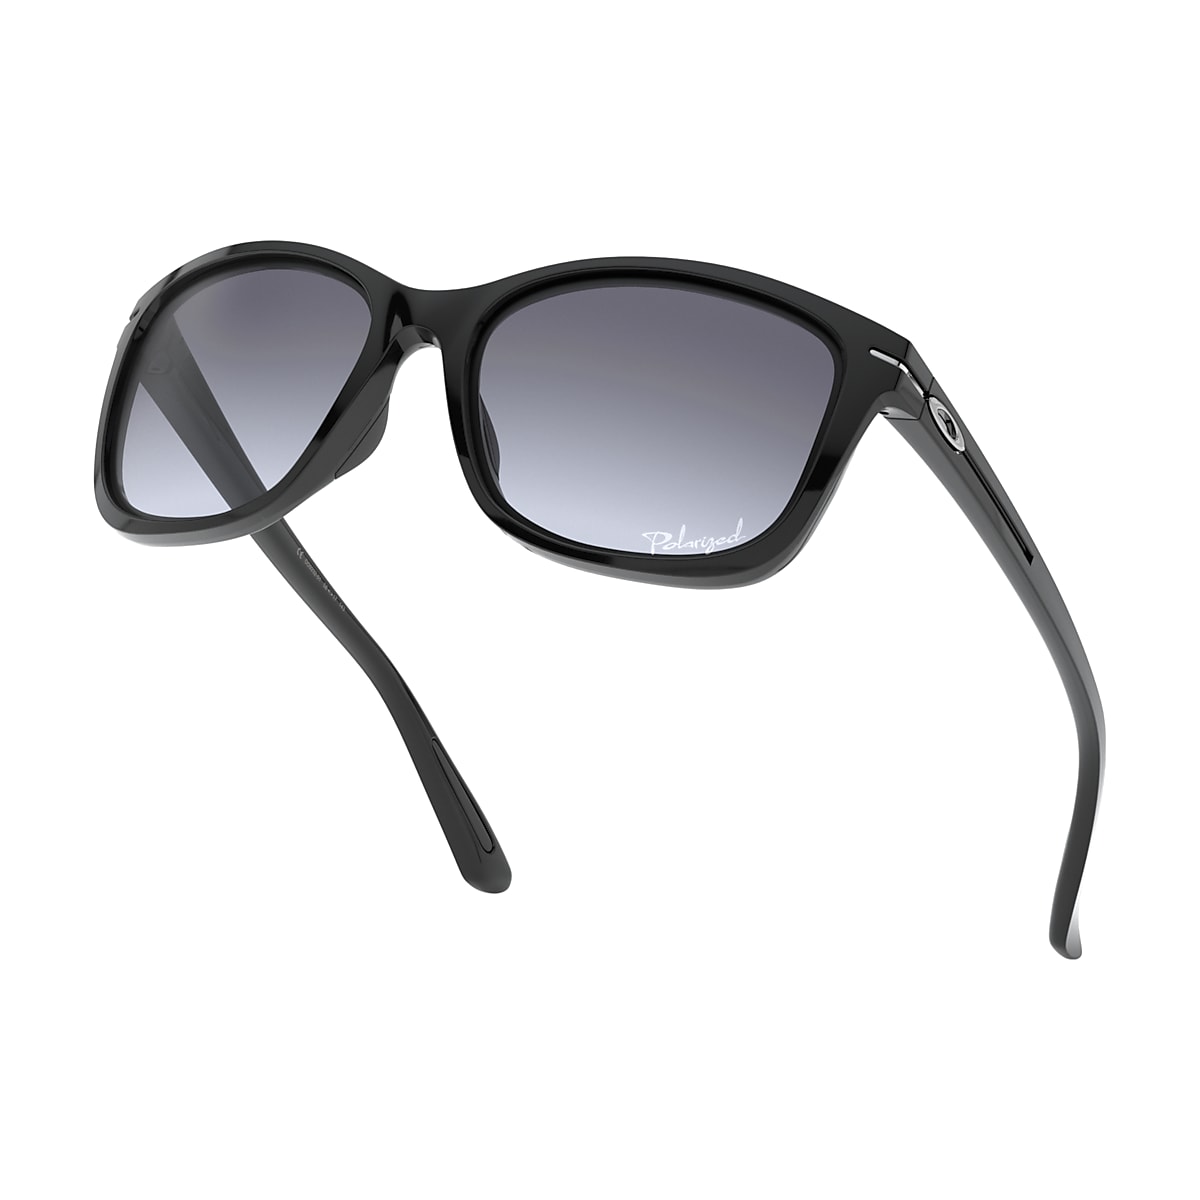 Drop In™ Grey Gradient Polarized Lenses, Polished Black Frame Sunglasses